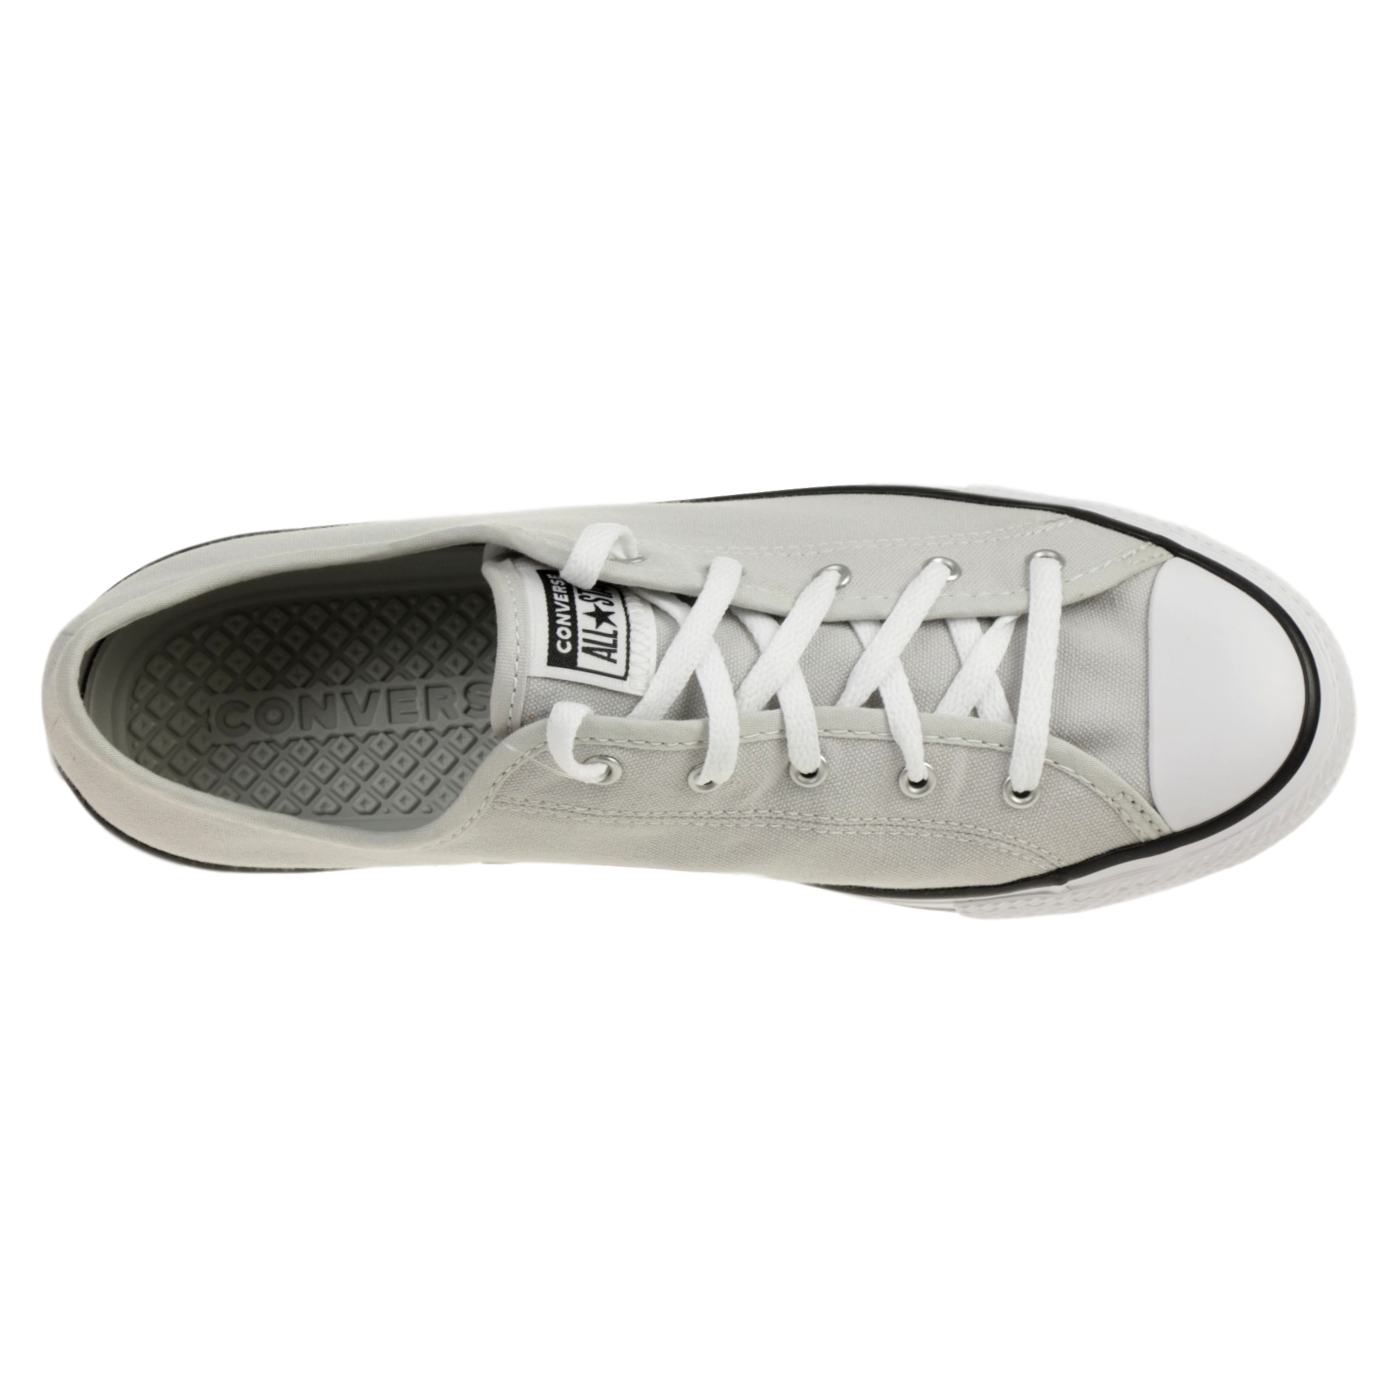 Converse Damen CTAS Dainty Ox New Comfort Low-Top Sneaker 564983C Grau